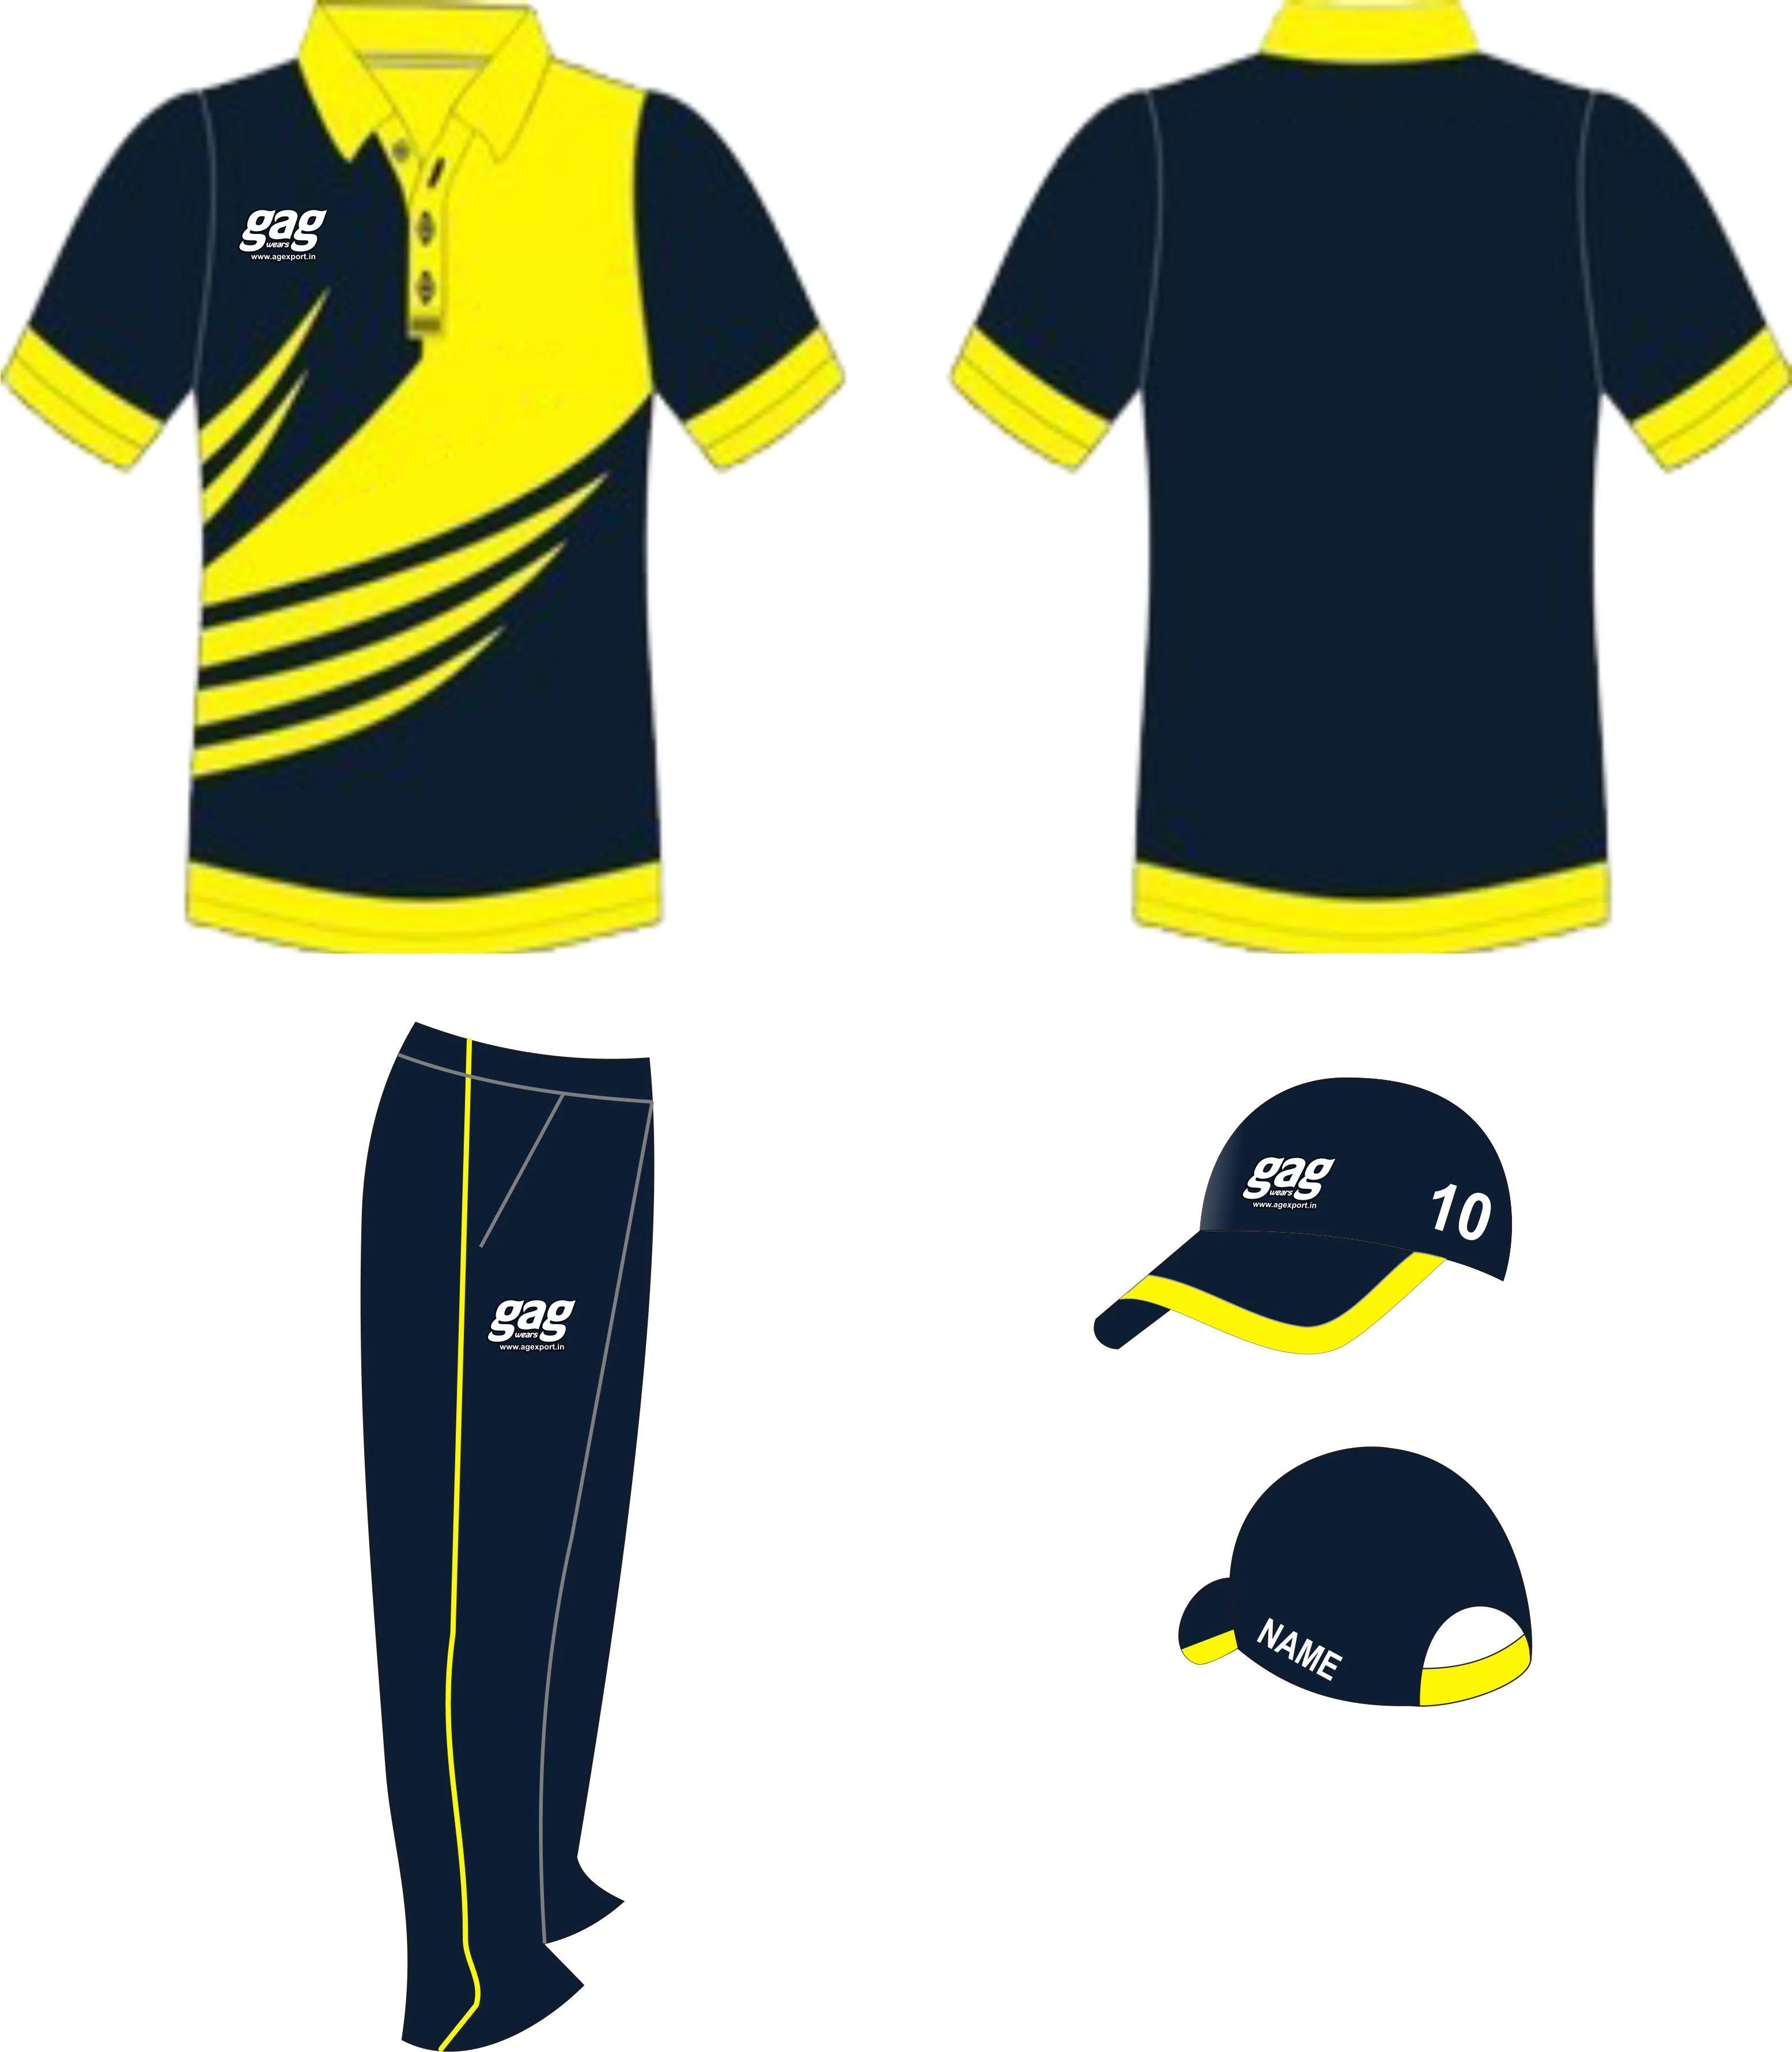 cricket jersey shop